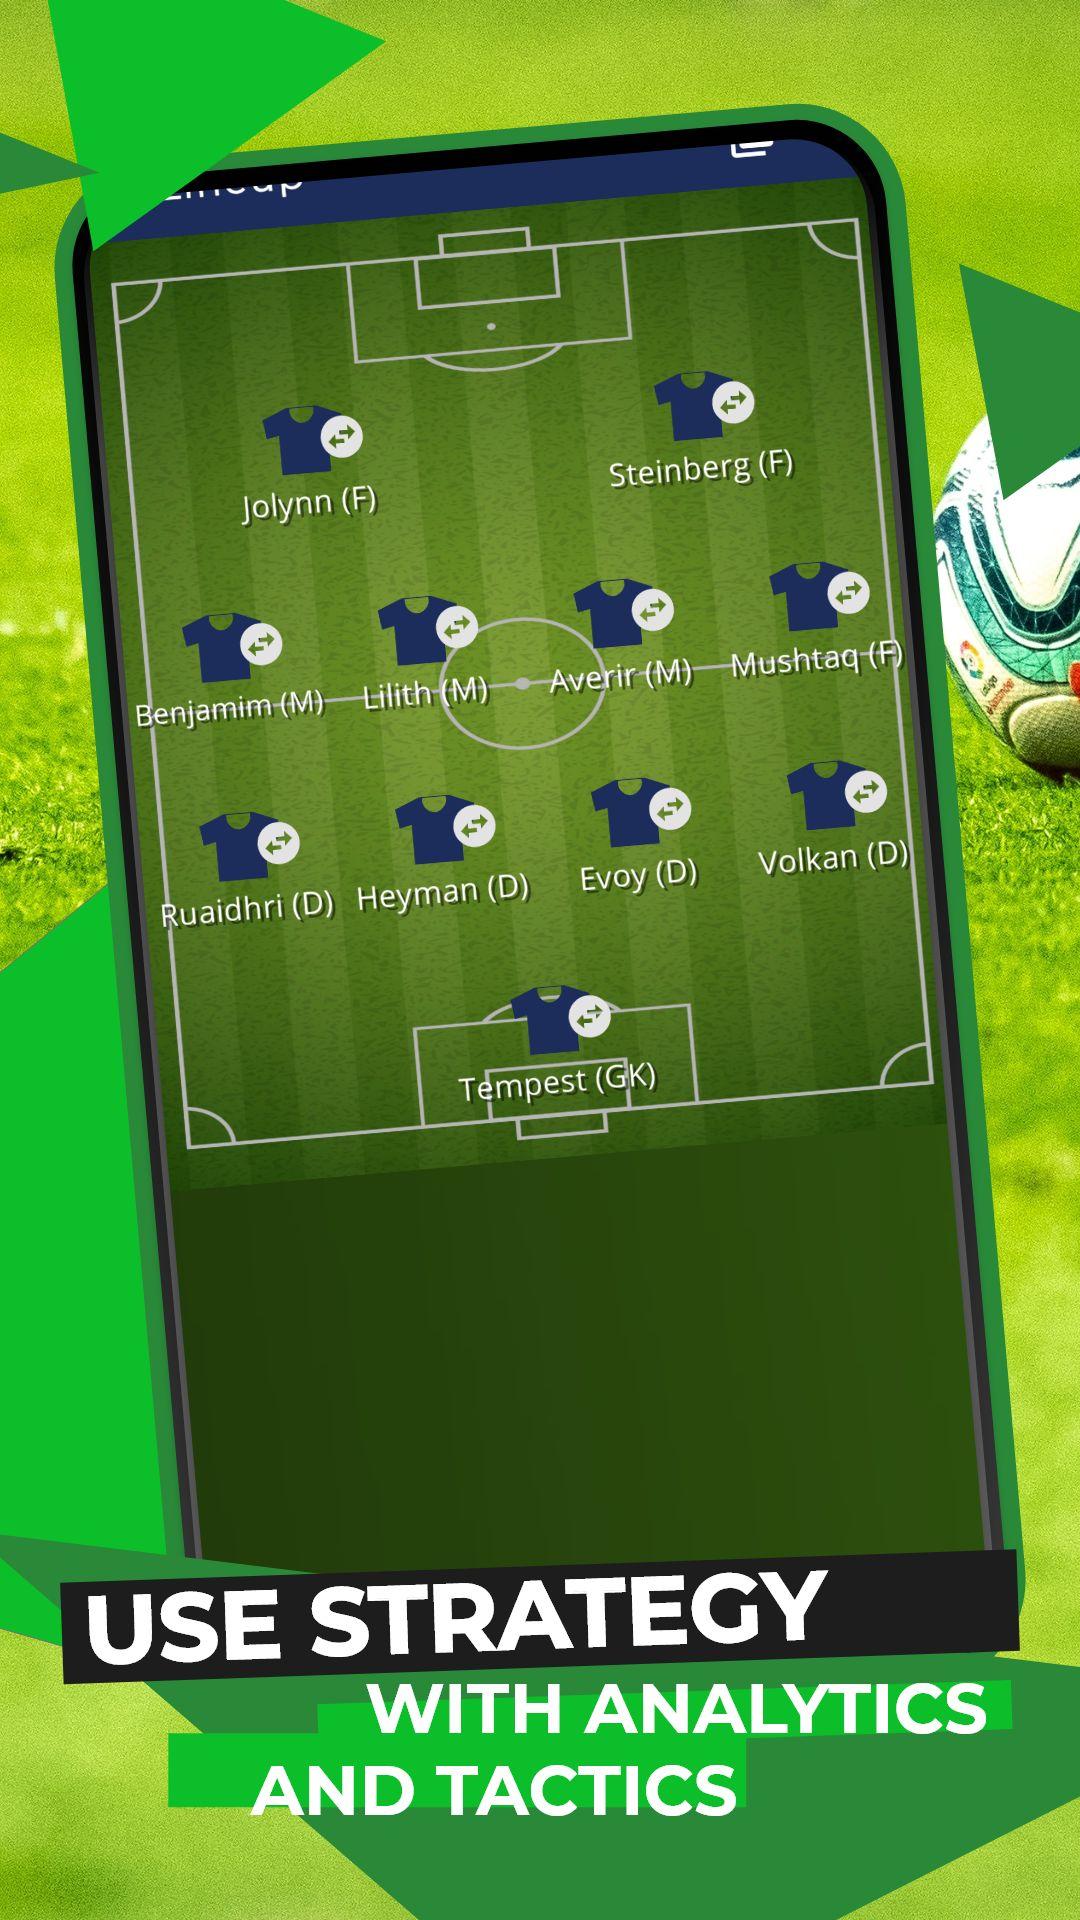 Astonishing Eleven - Football Management game 0.96 Screenshot 8